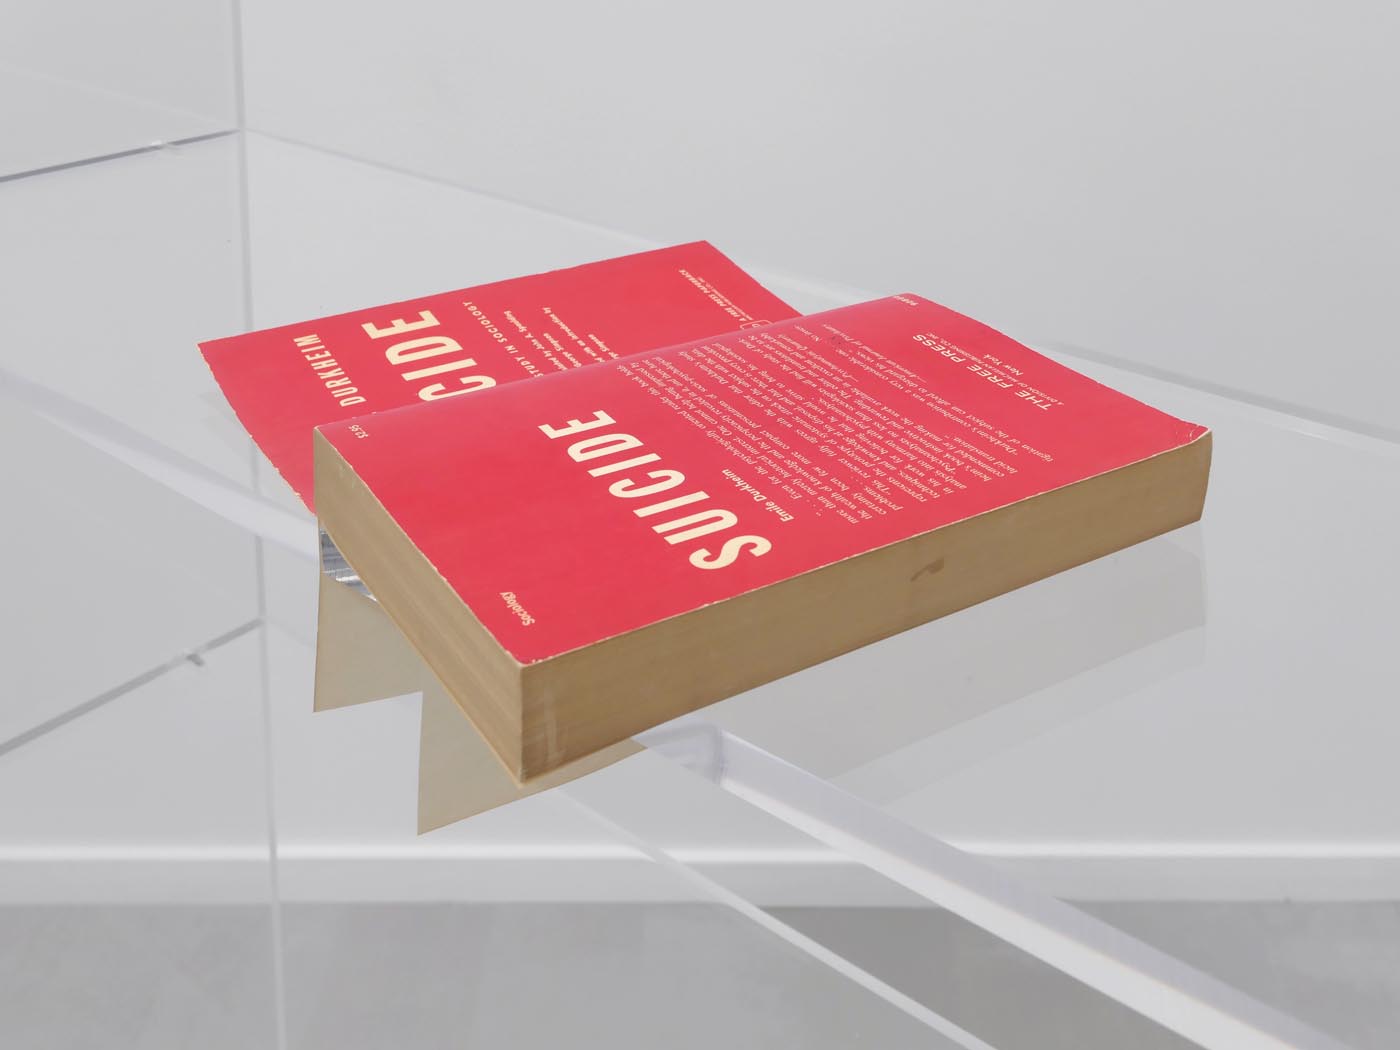 <p><em>Untitled</em>, 2020, 6 x 3,4 x 0,01 cm, found book, acrylic glass, stainless steel</p>